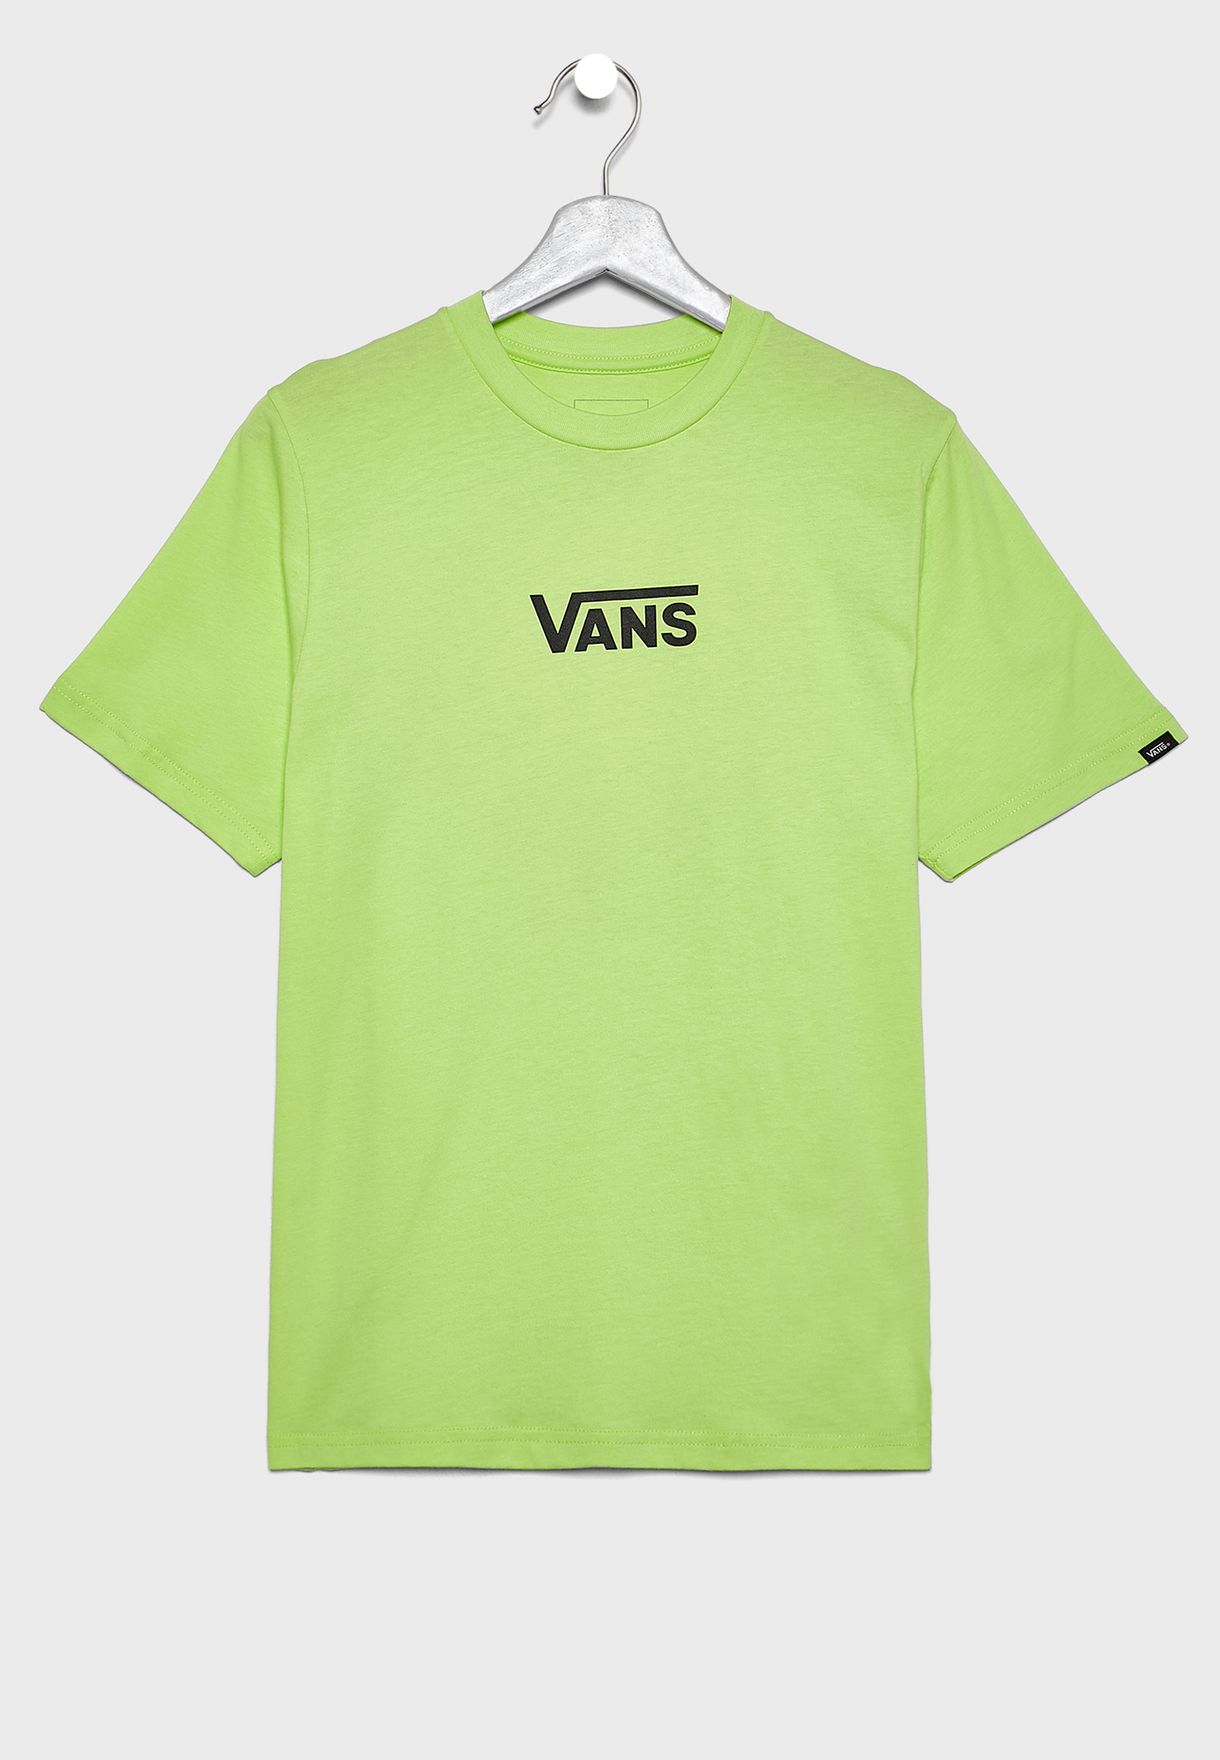 vans green tshirt